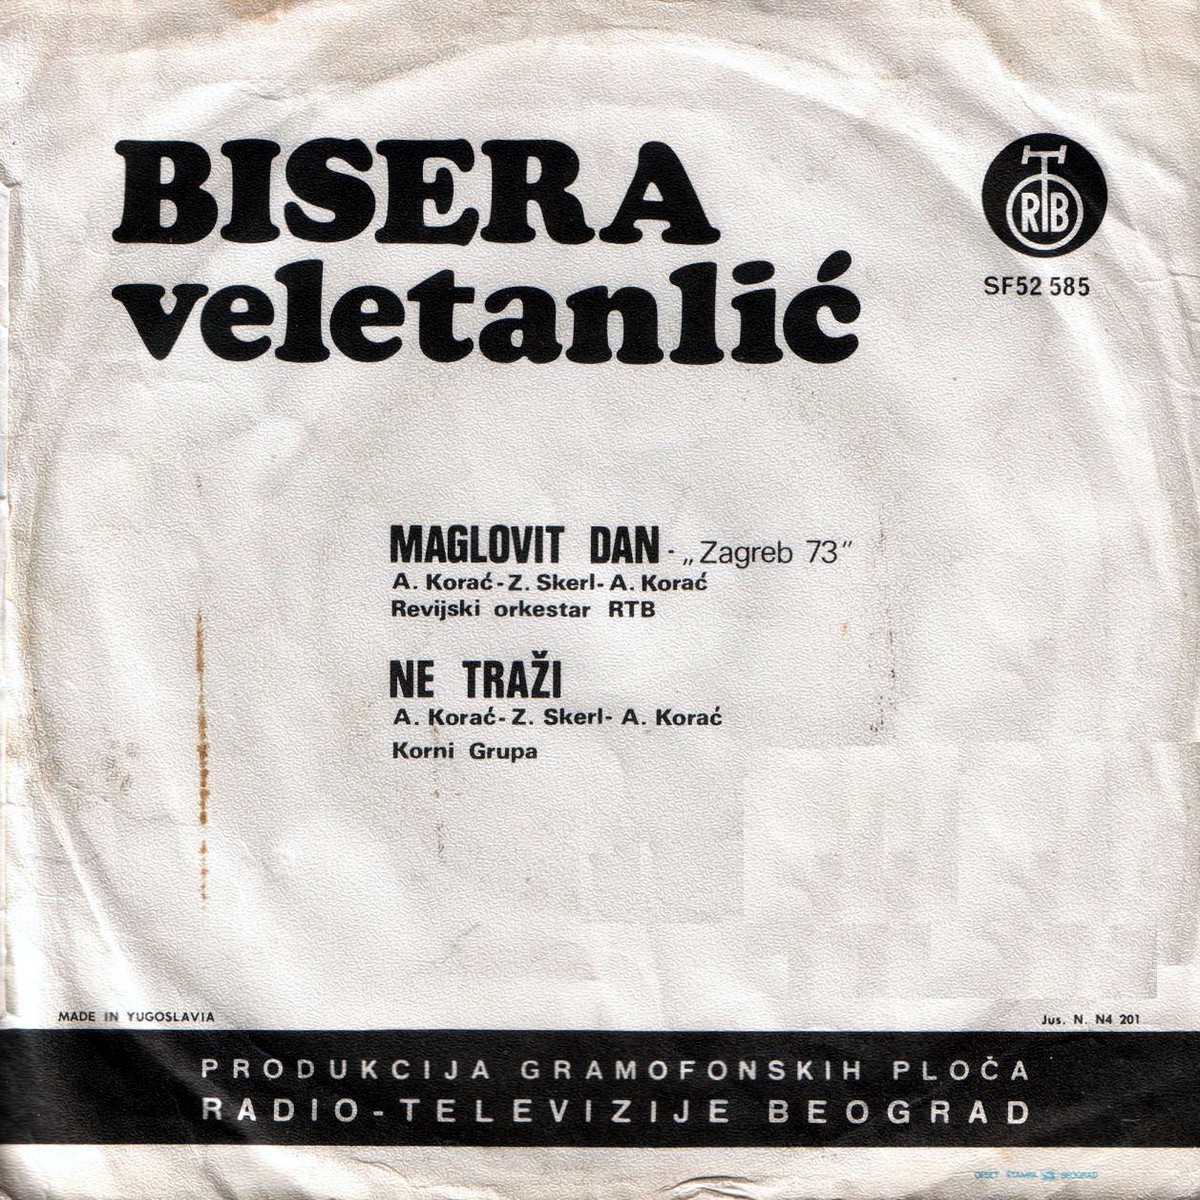 Bisera Veletanlic 1973 Maglovit dan b